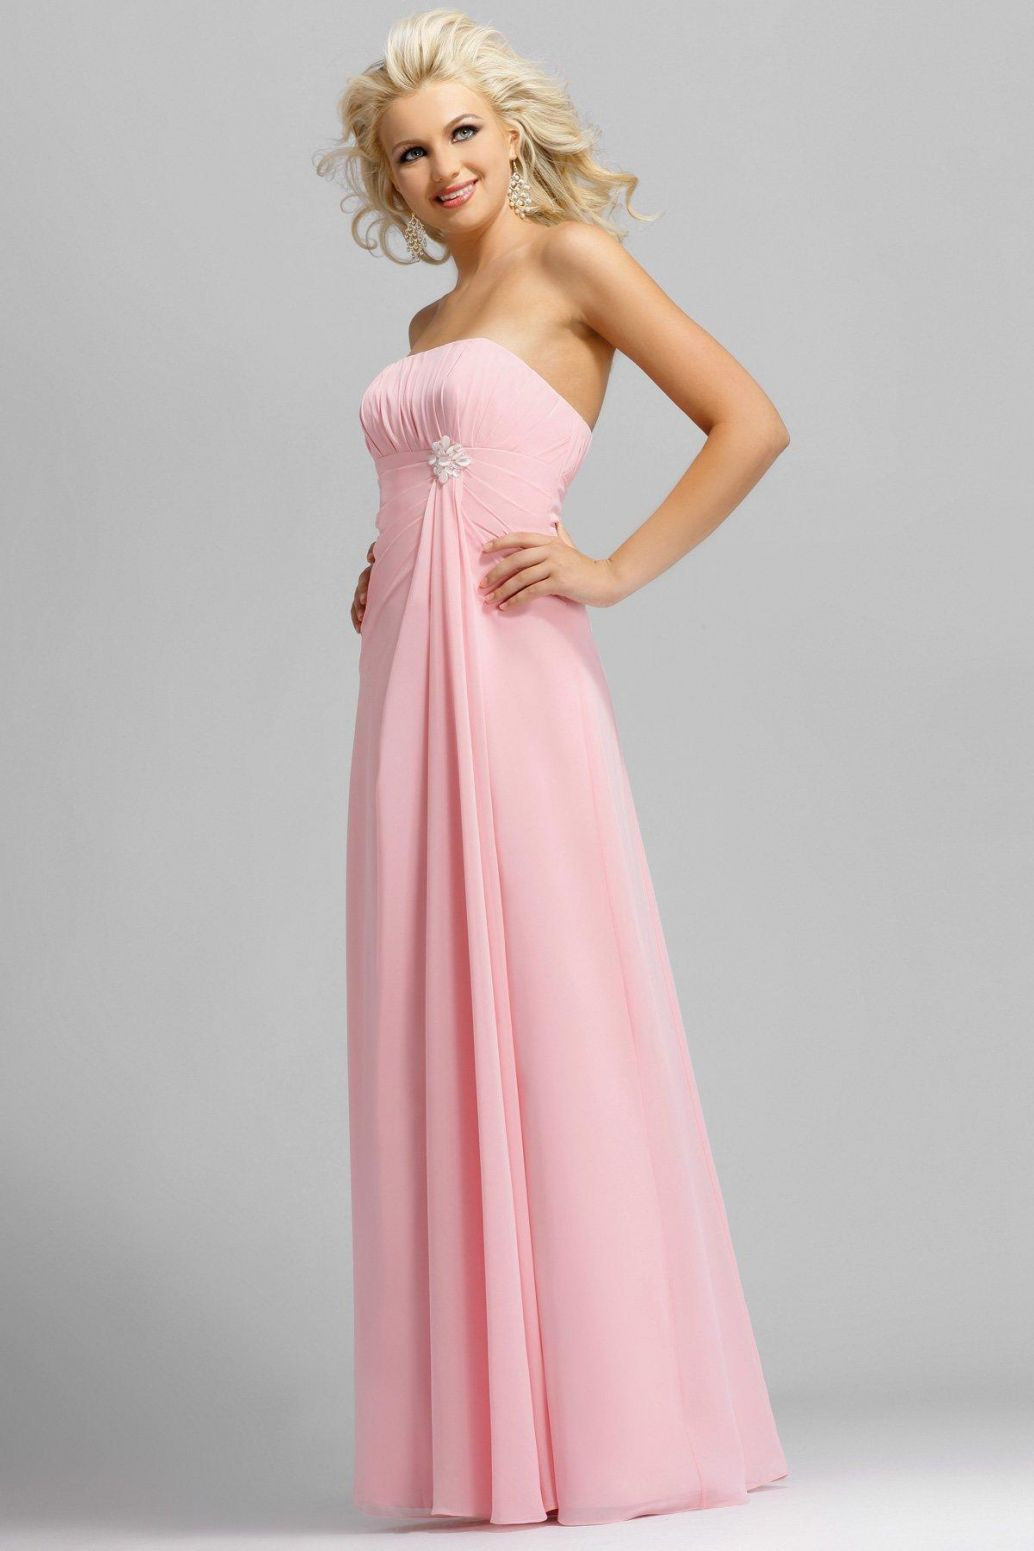 Wedding Dresses Pics
 Long Bright Pink Bridesmaid Dress Designs Wedding Dress